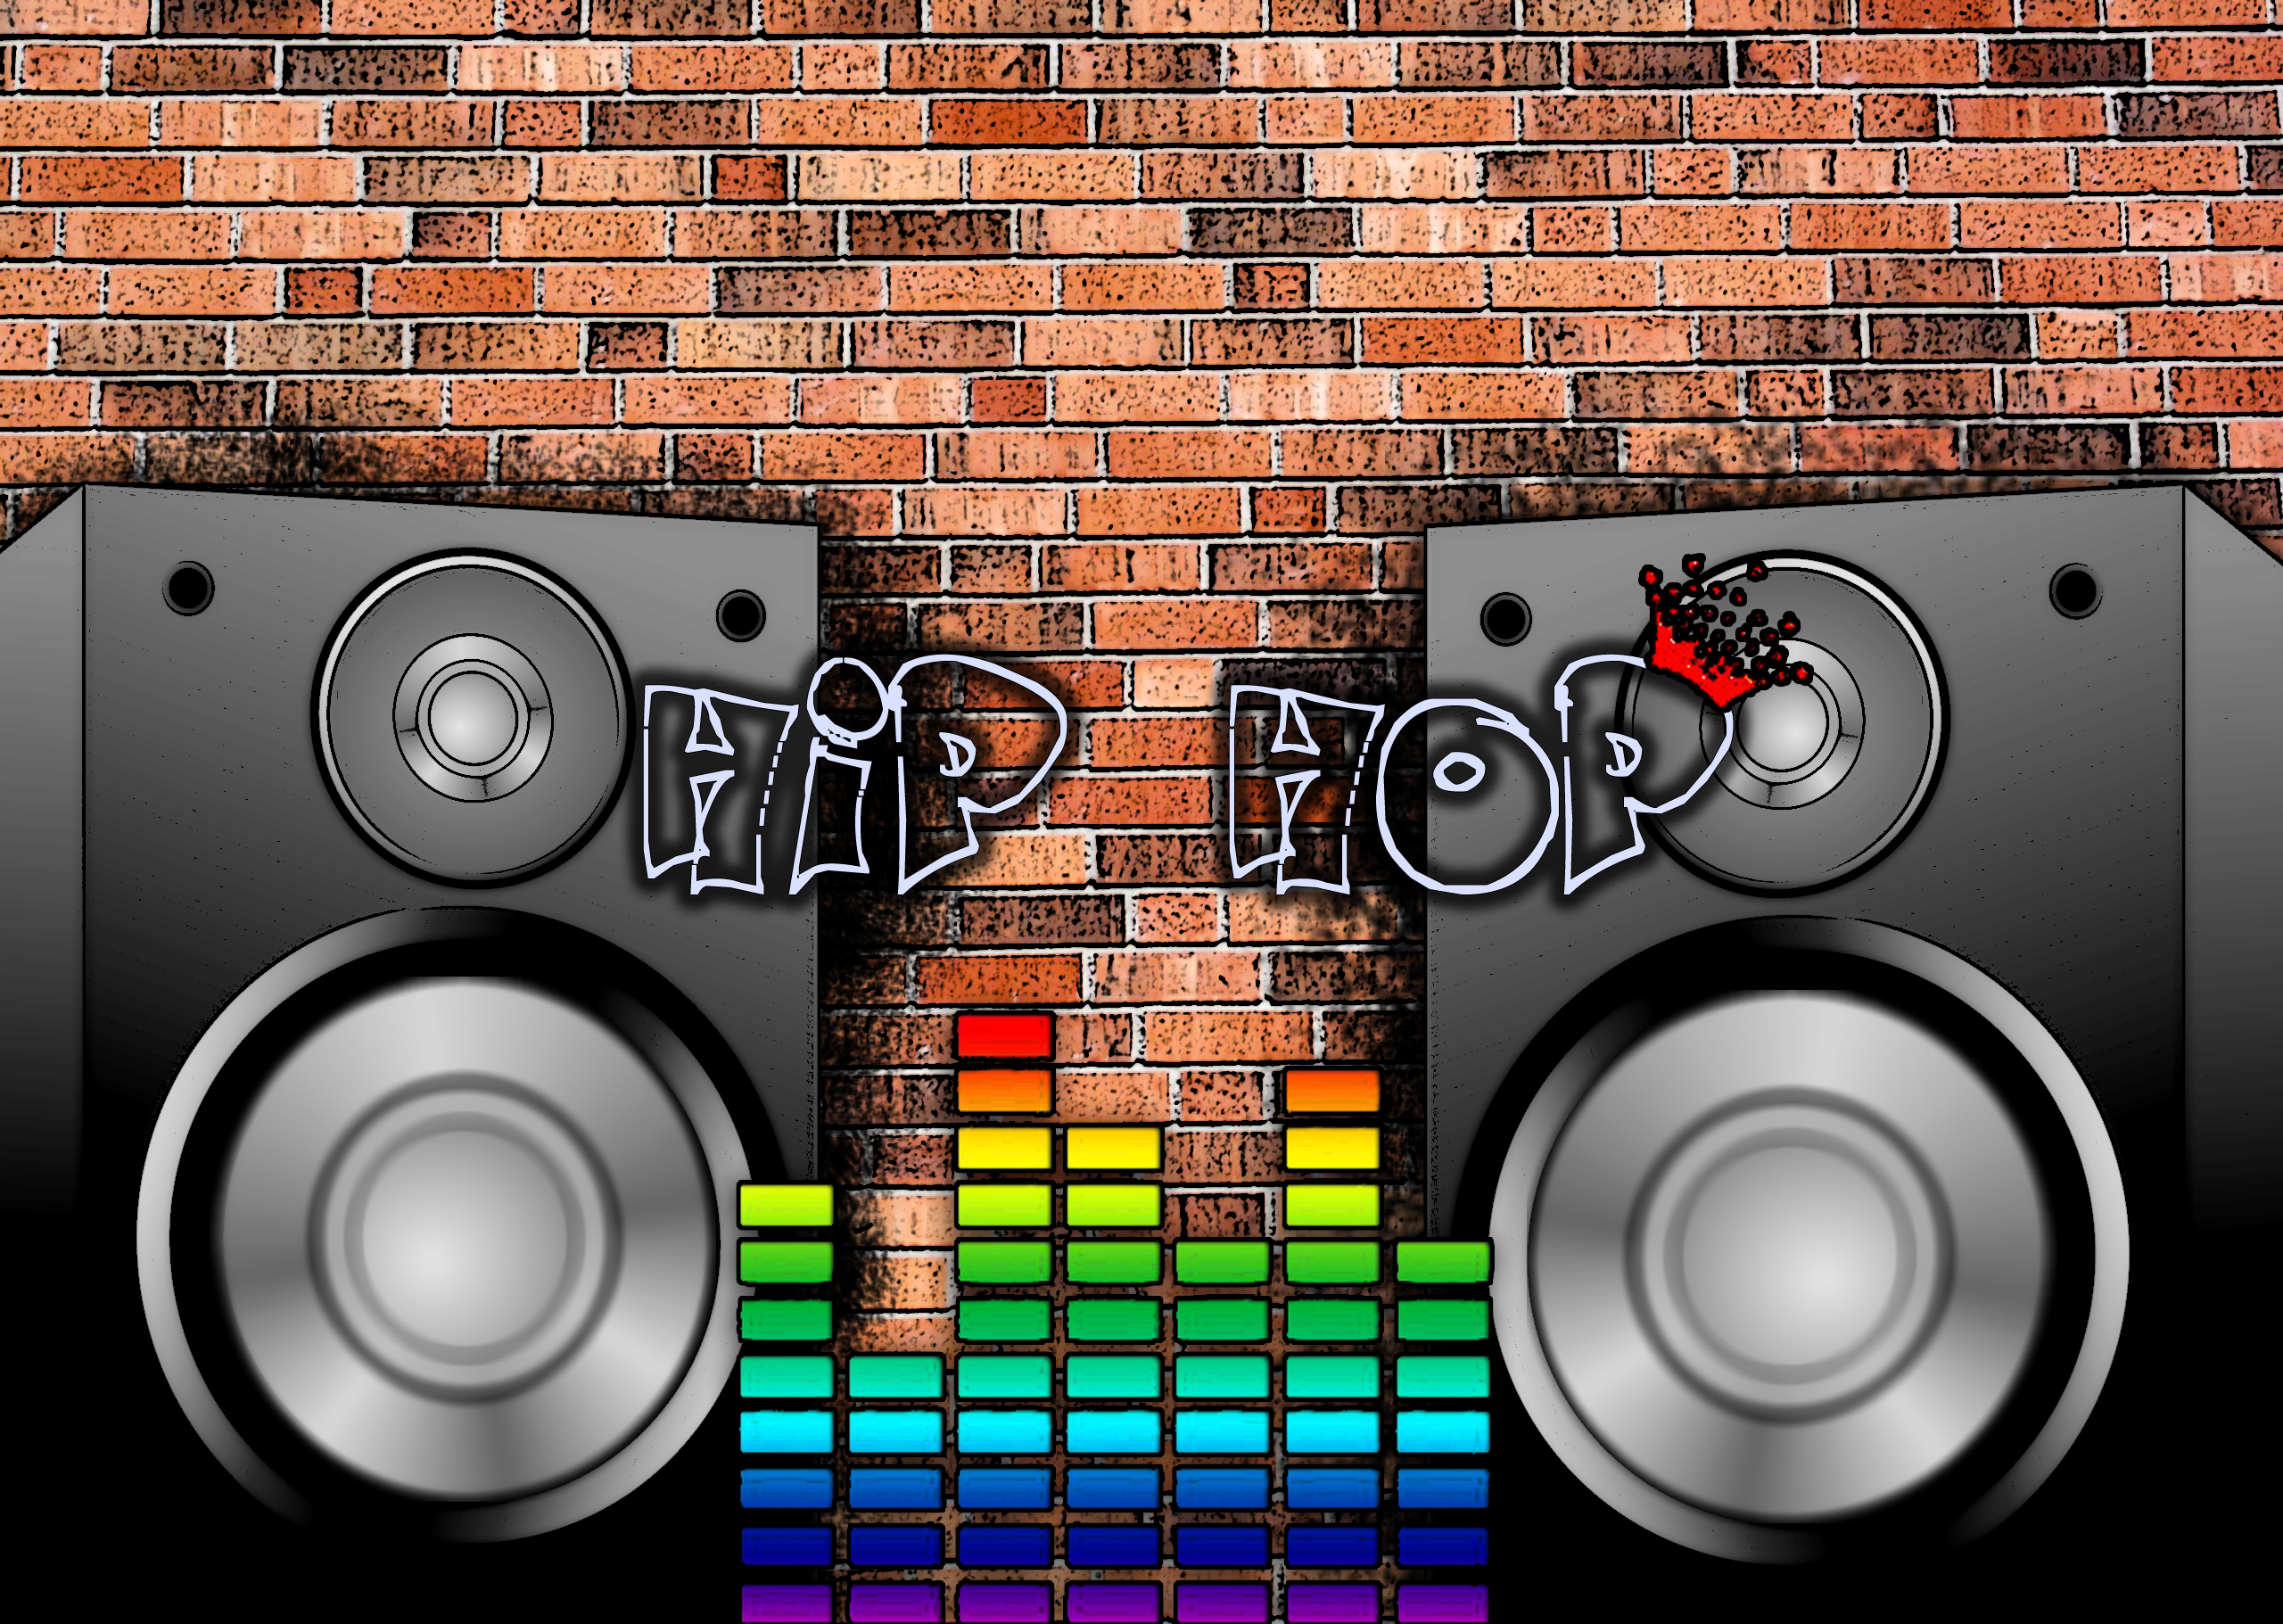 Speaker Hip Hop Music Wallpaper Desktop Computer,Gadget and other